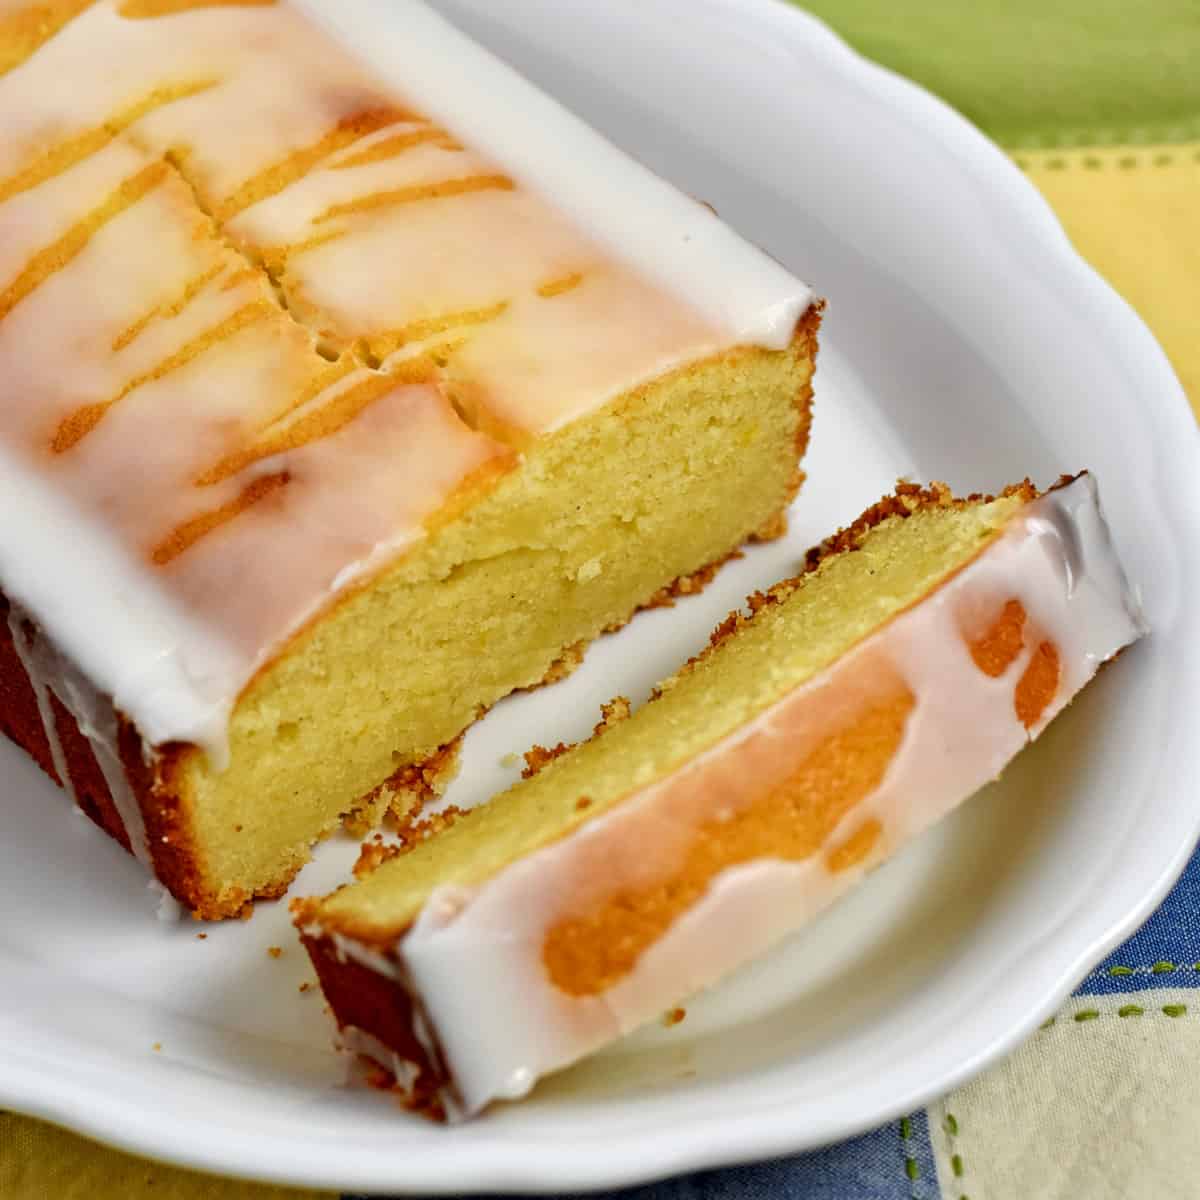 https://flavorwalk.com/wp-content/uploads/2021/06/Gluten-Free-Lemon-Pound-Cake-12.jpg